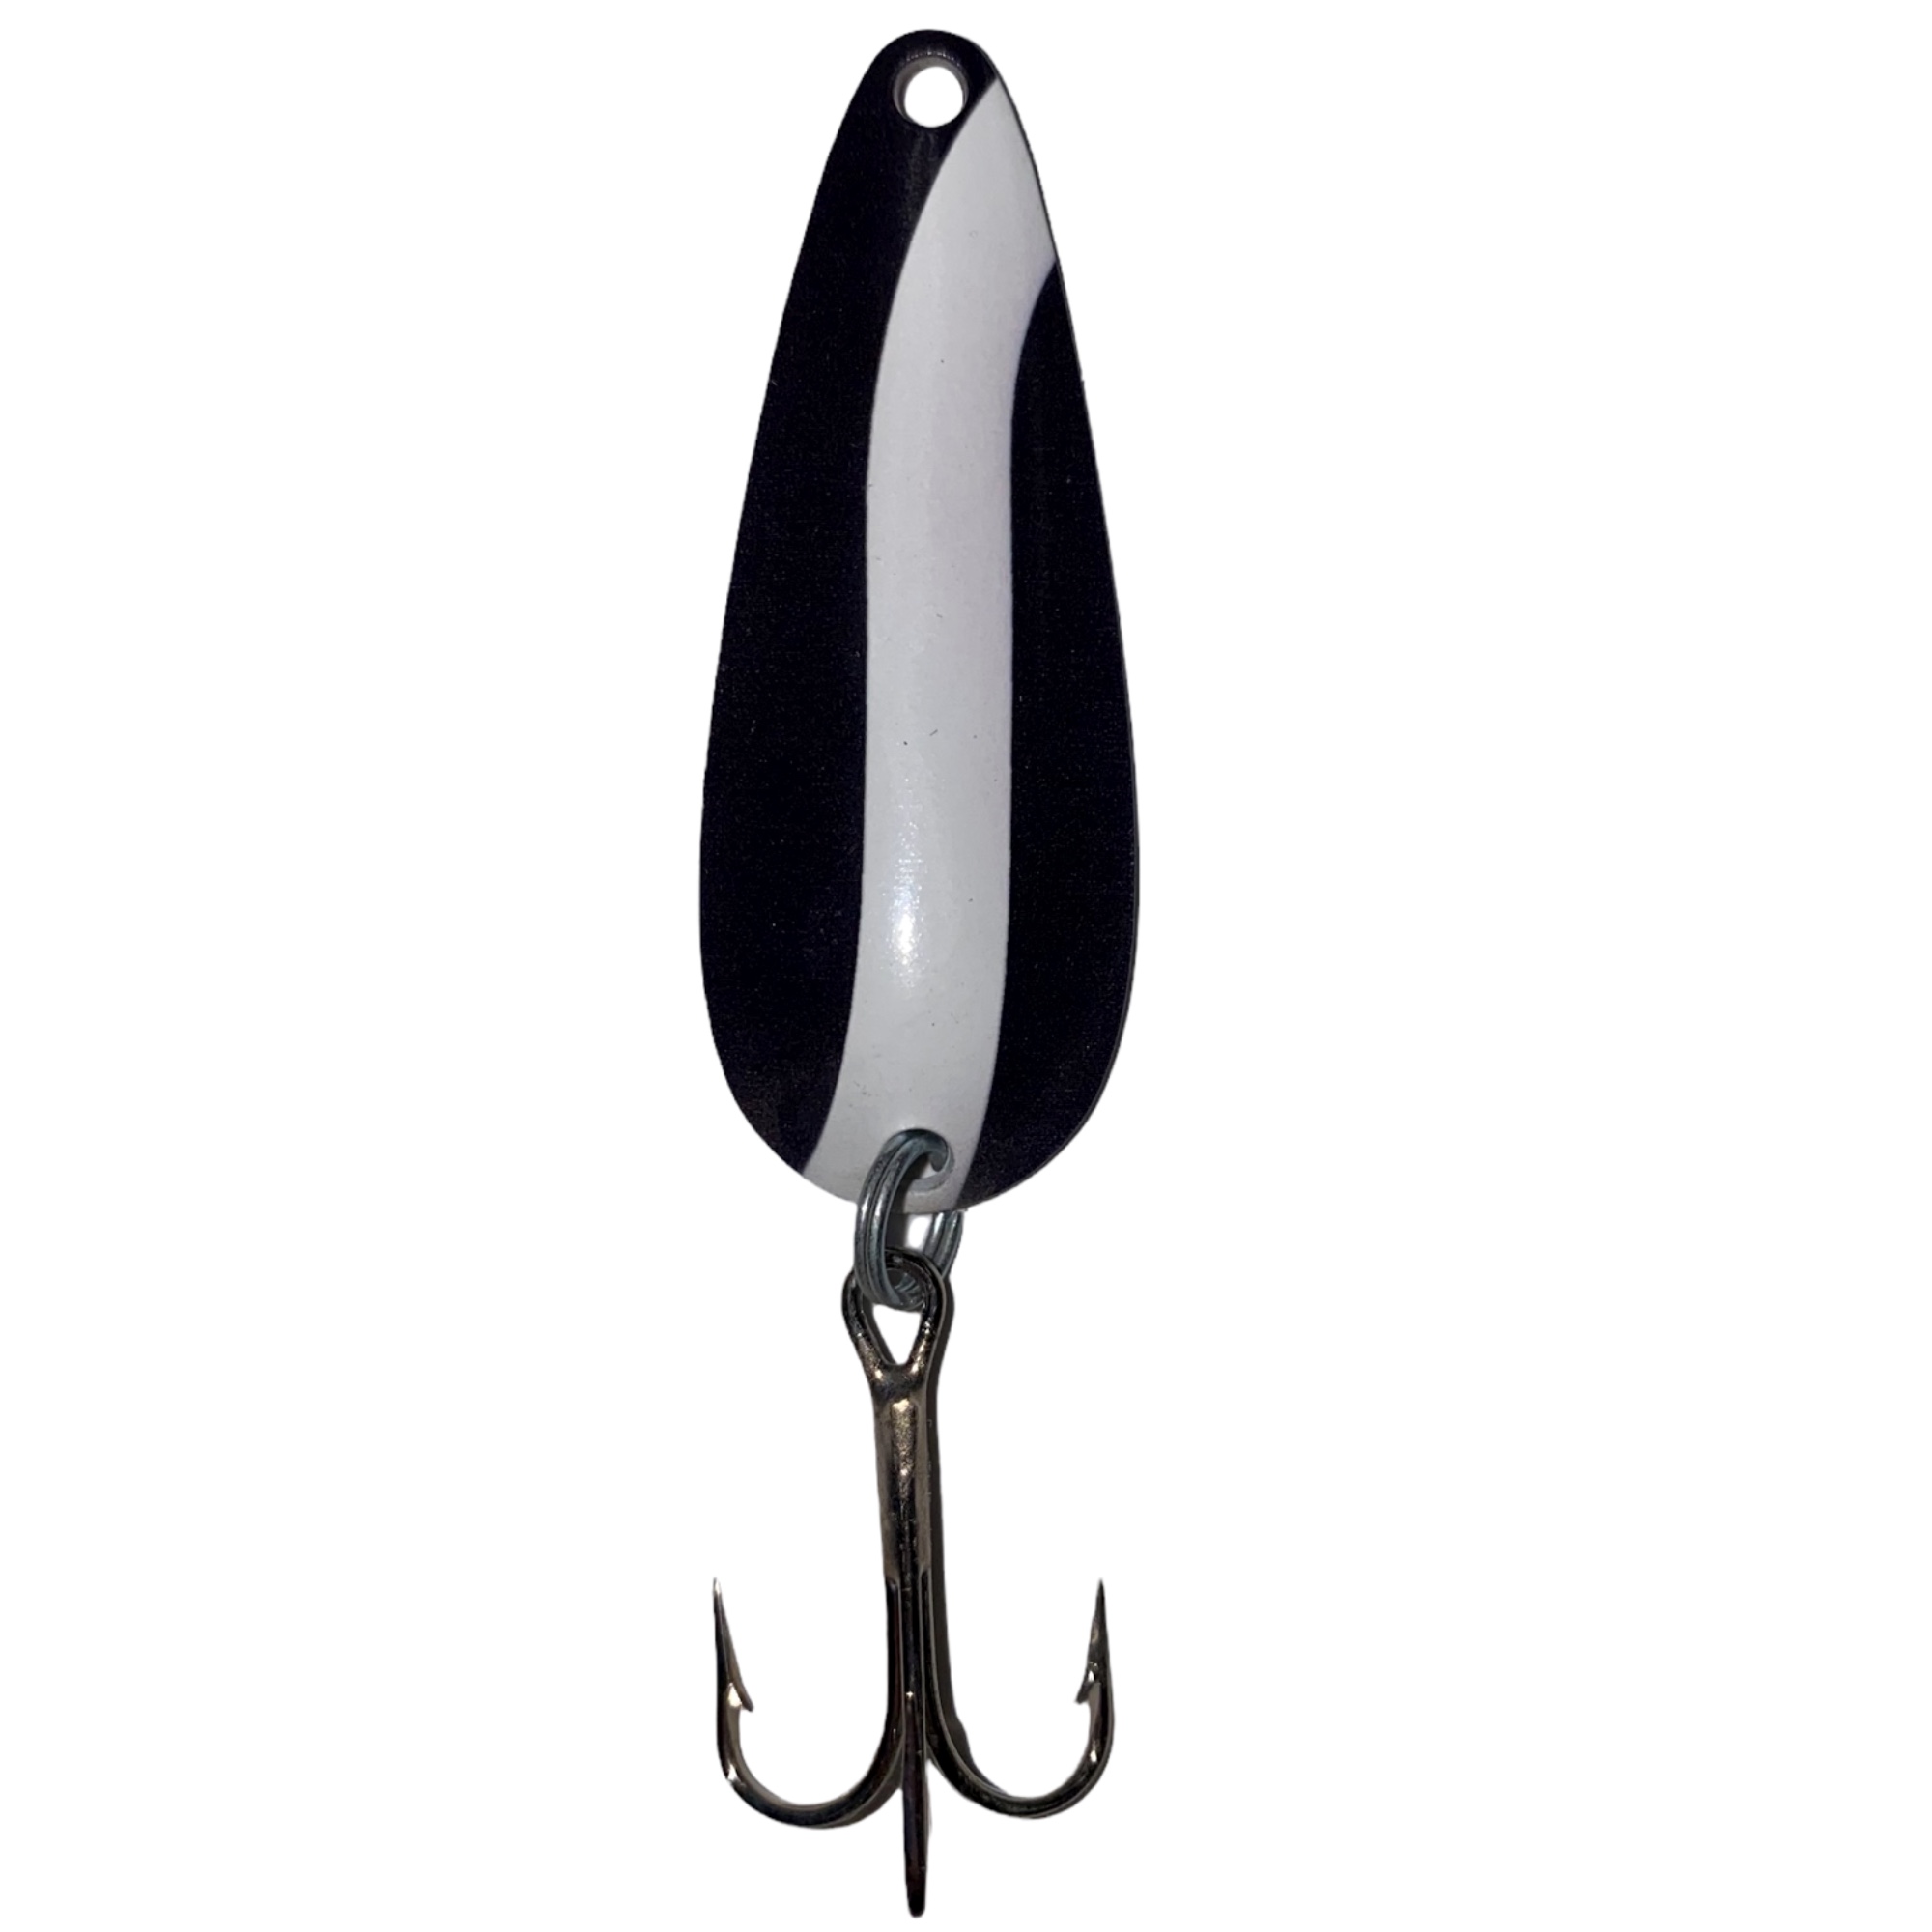 Three Eppinger Cop-E-Cat IMP Black/White Fishing Spoons 3/4 oz 2 5